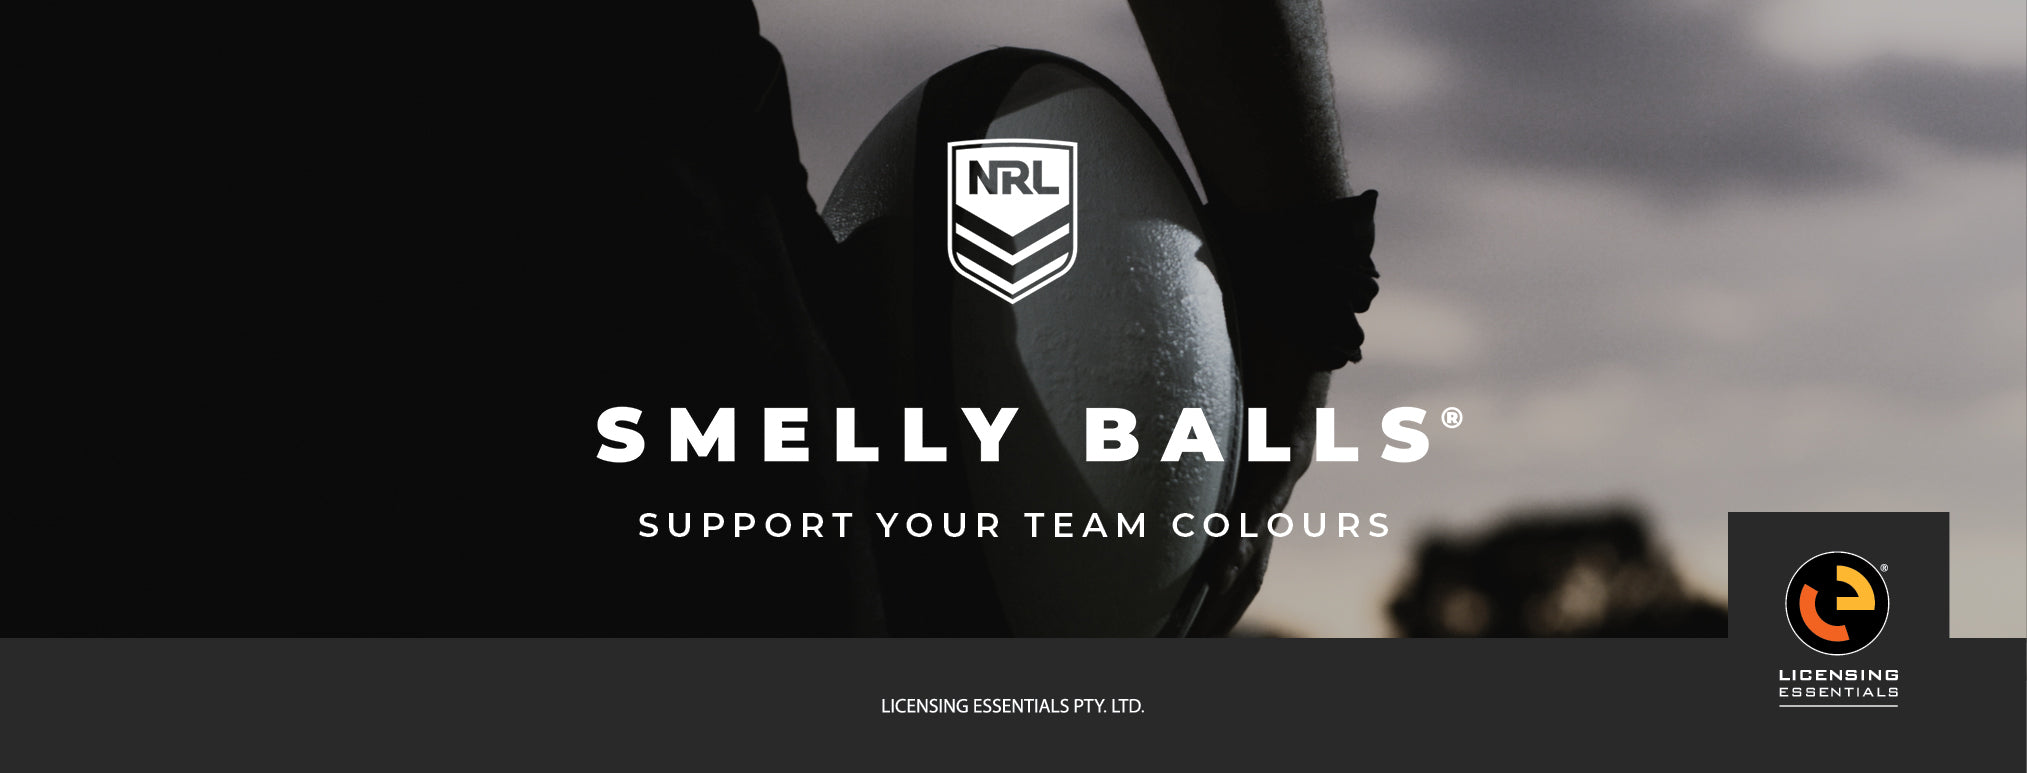 NRL_Smelly_Balls_Licensing